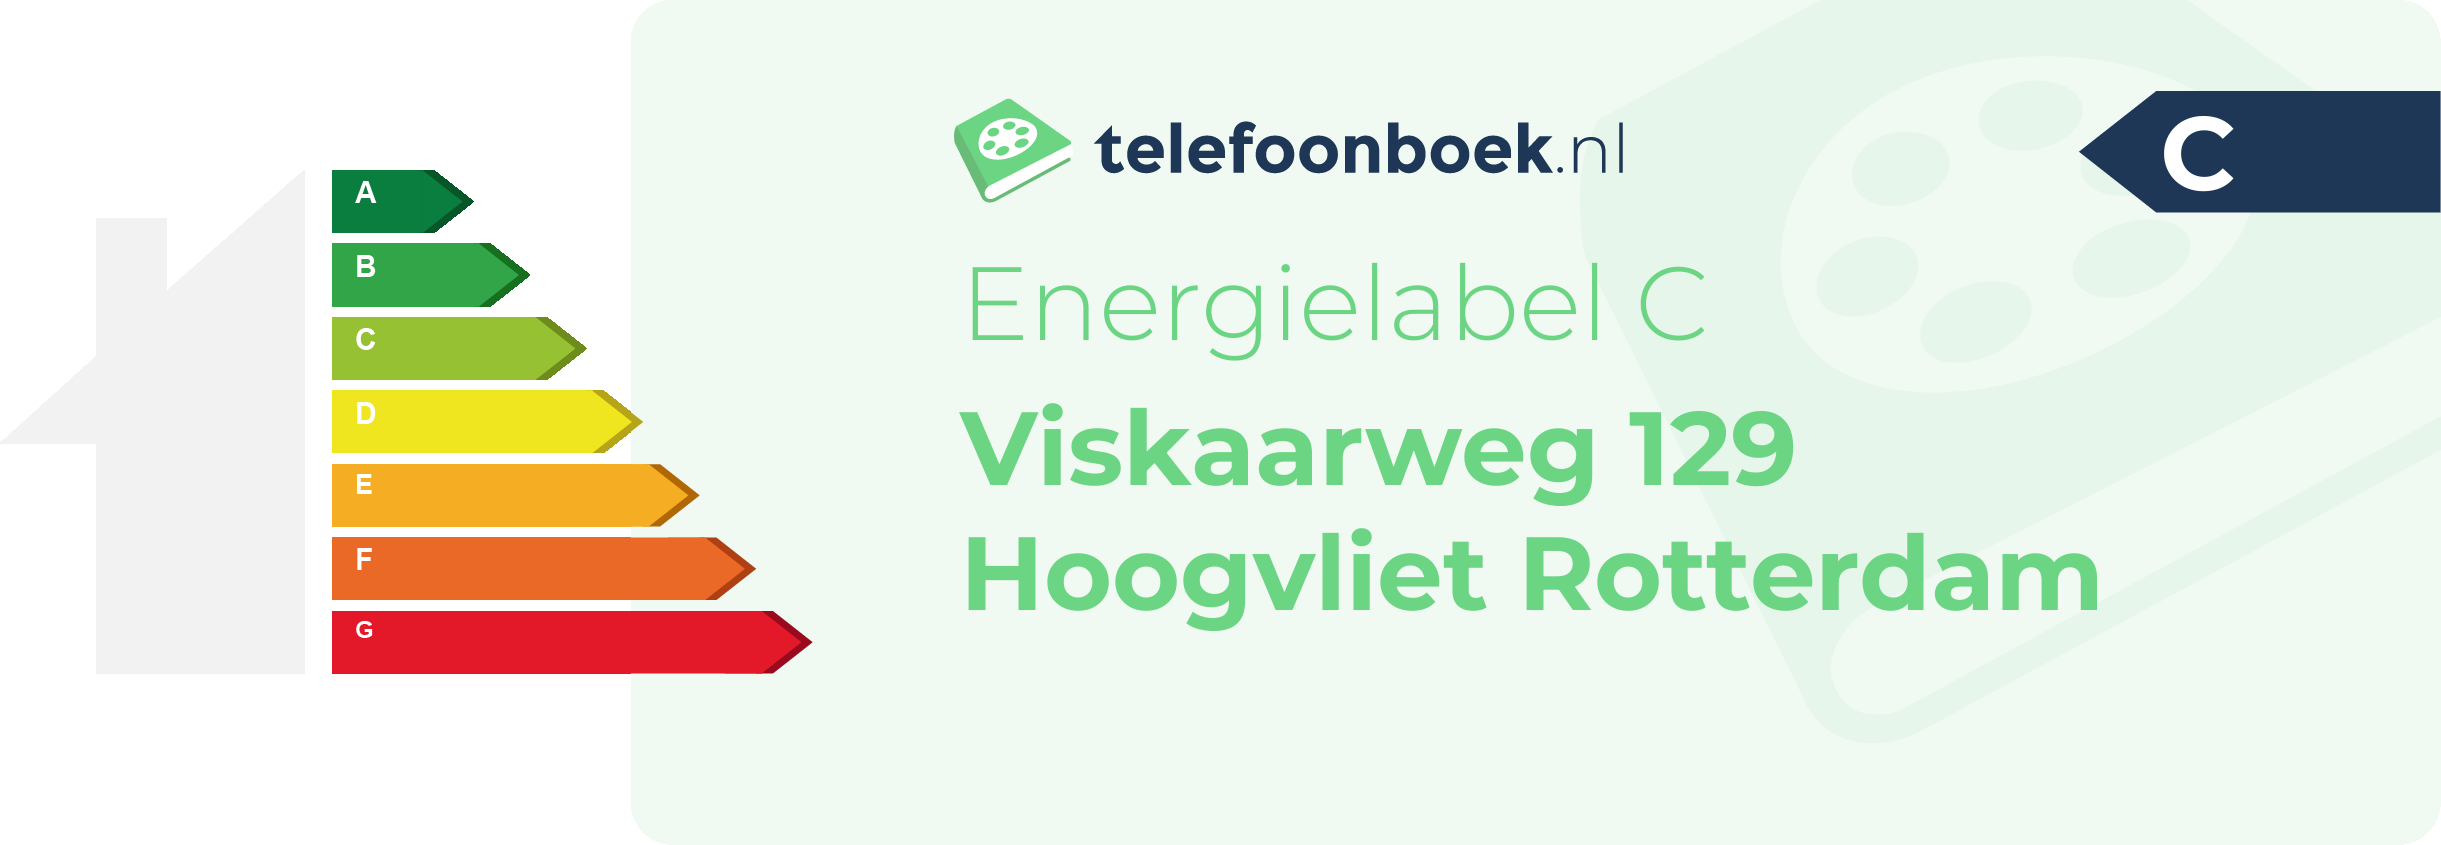 Energielabel Viskaarweg 129 Hoogvliet Rotterdam